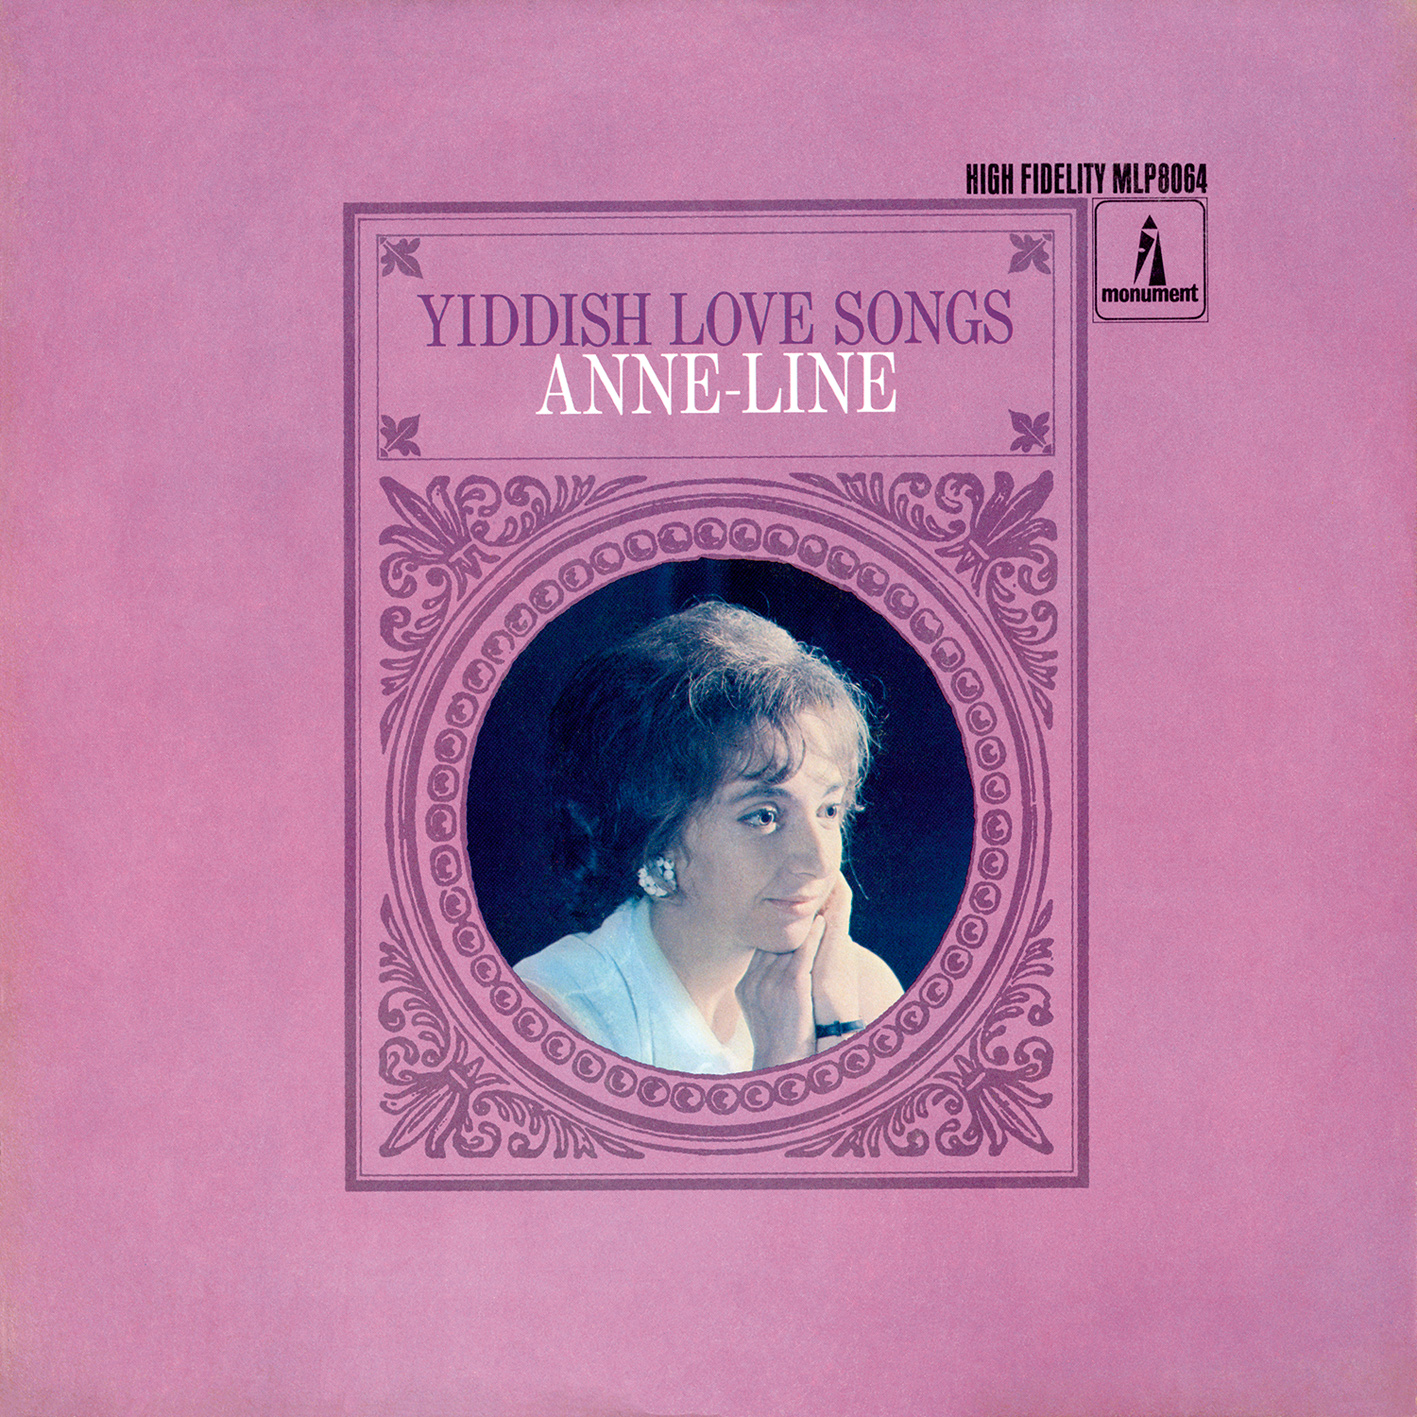 Anne-Line - Yiddish Love Songs (1965/2016) [HDTracks FLAC 24bit/192kHz]